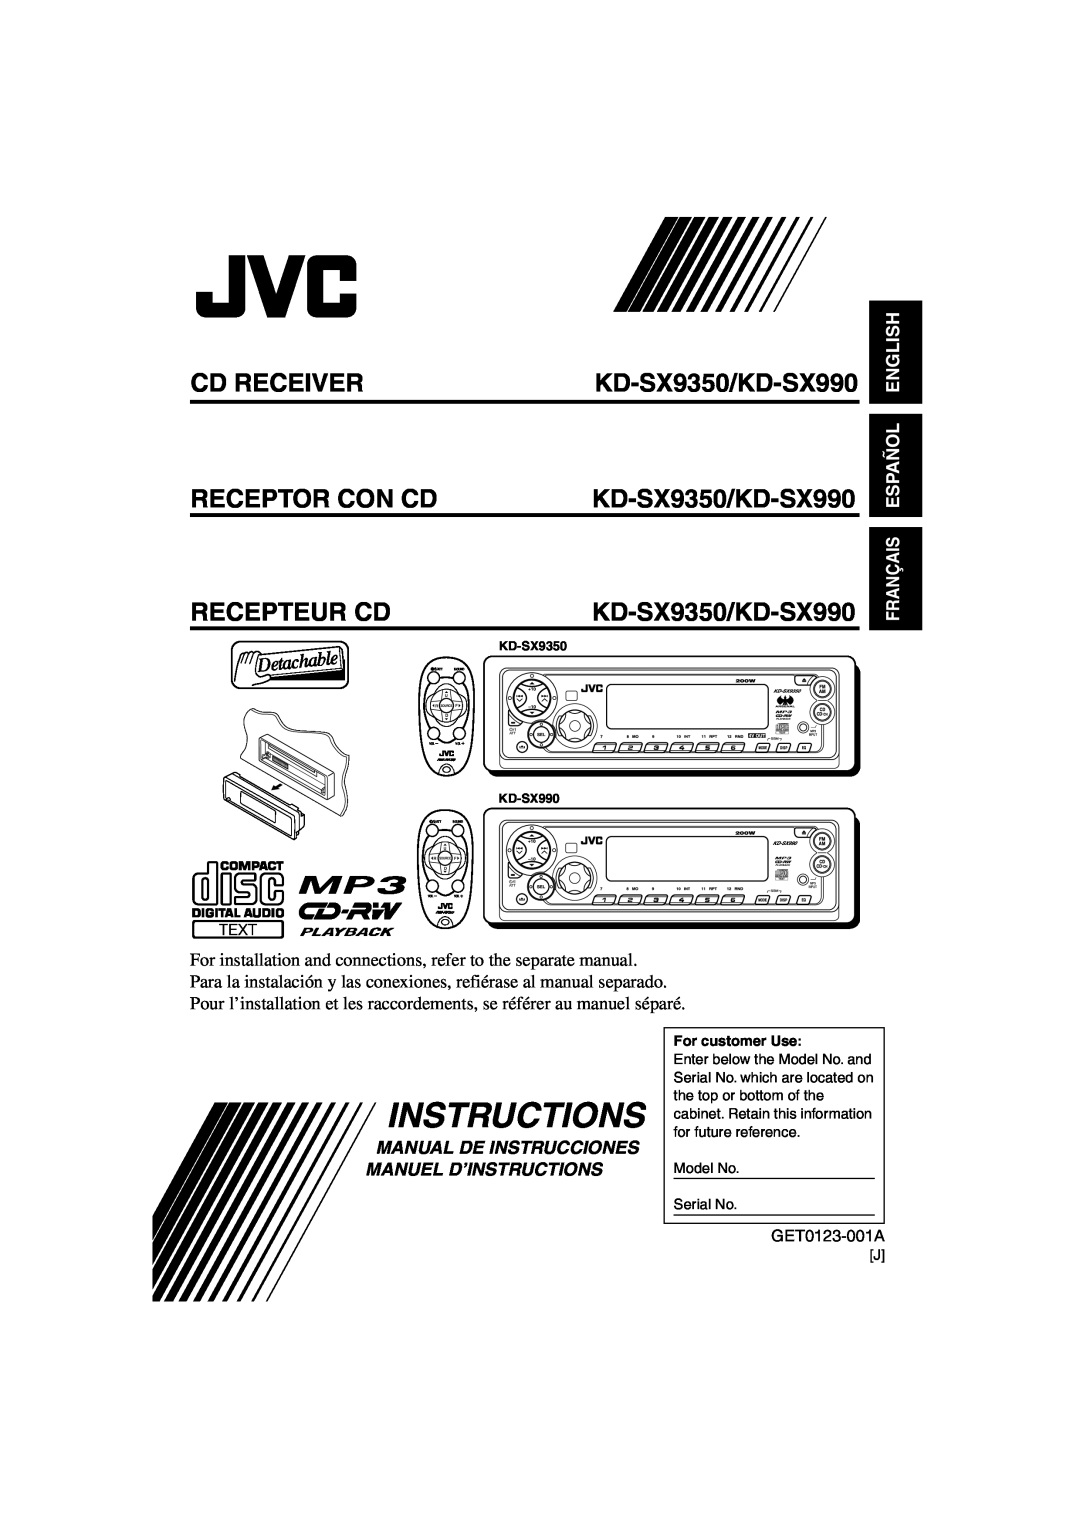 JVC manual Cd Receiver, Receptor Con Cd, Recepteur Cd, KD-SX9350/KD-SX990, Instructions, English Espa Olñ 